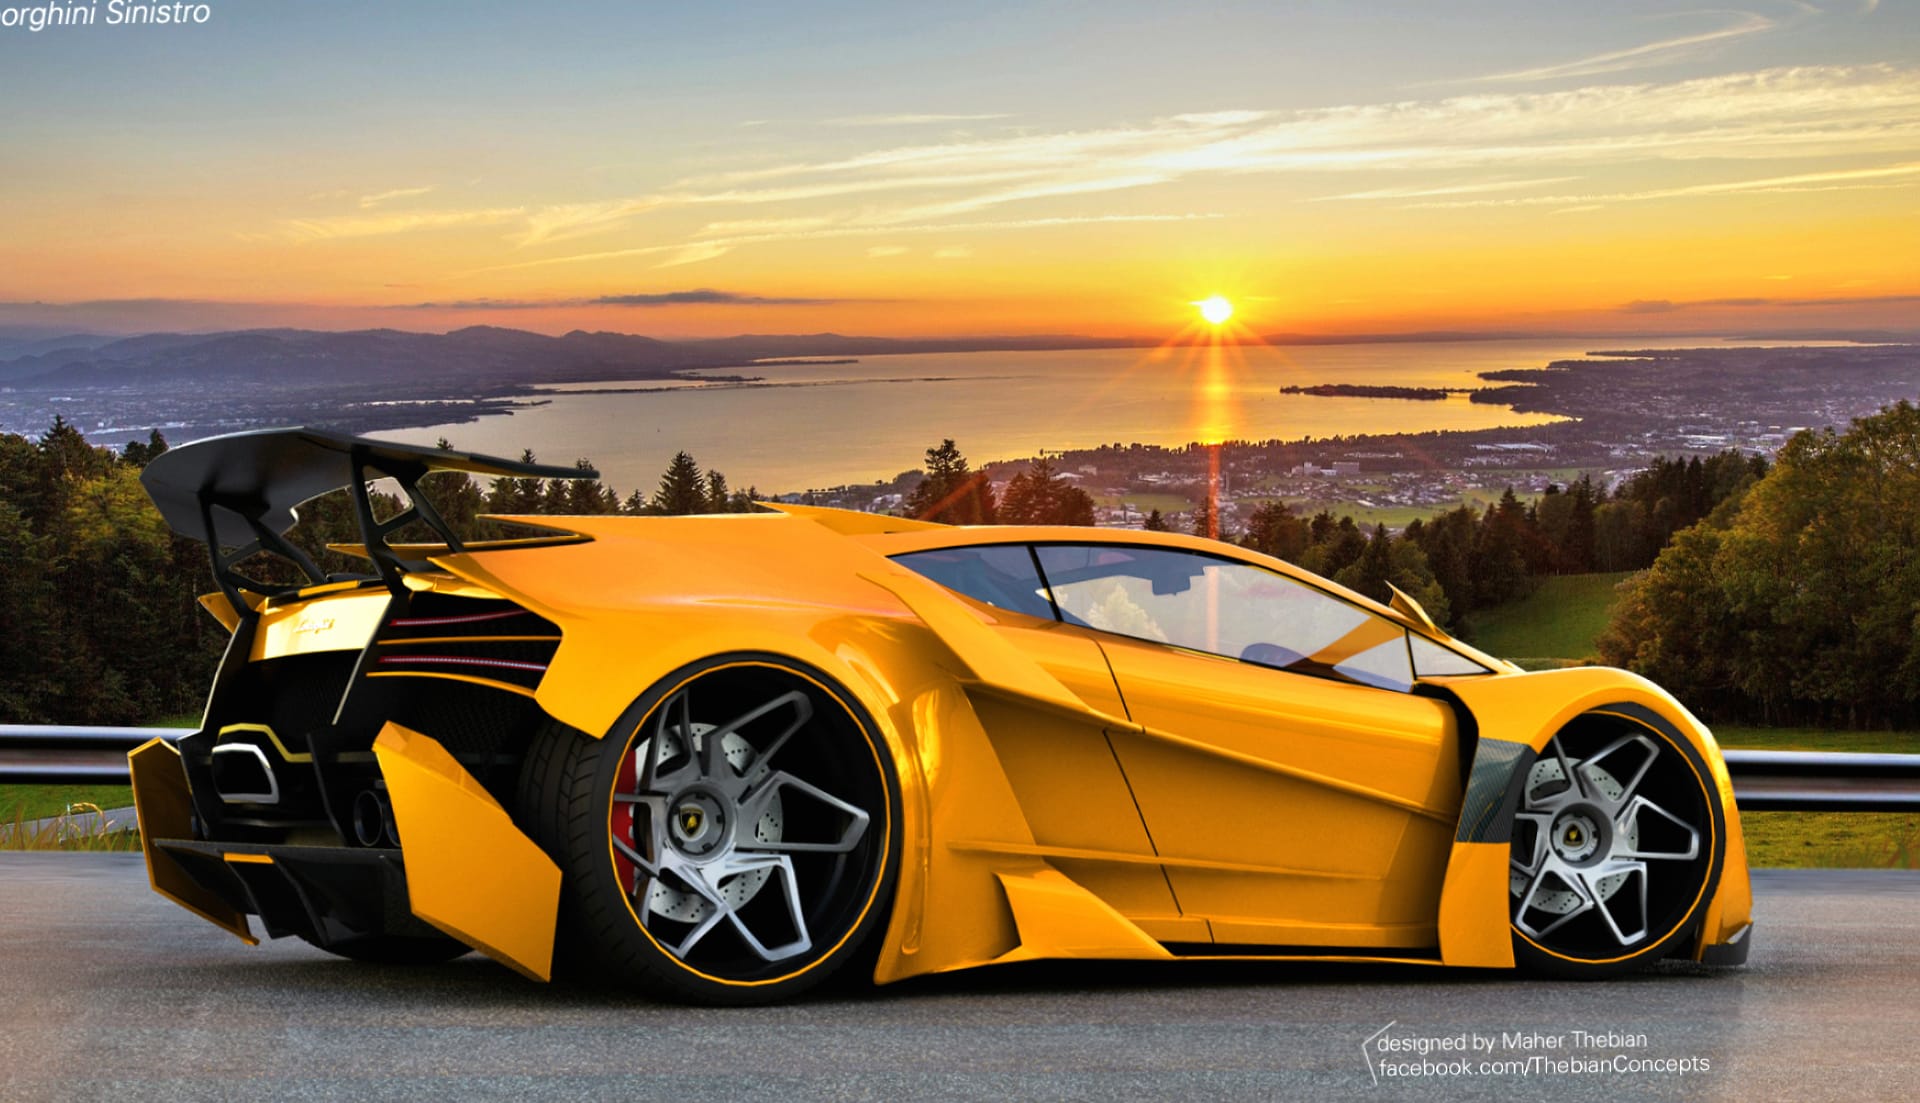 Lamborghini Sinistro Concept at 1280 x 960 size wallpapers HD quality